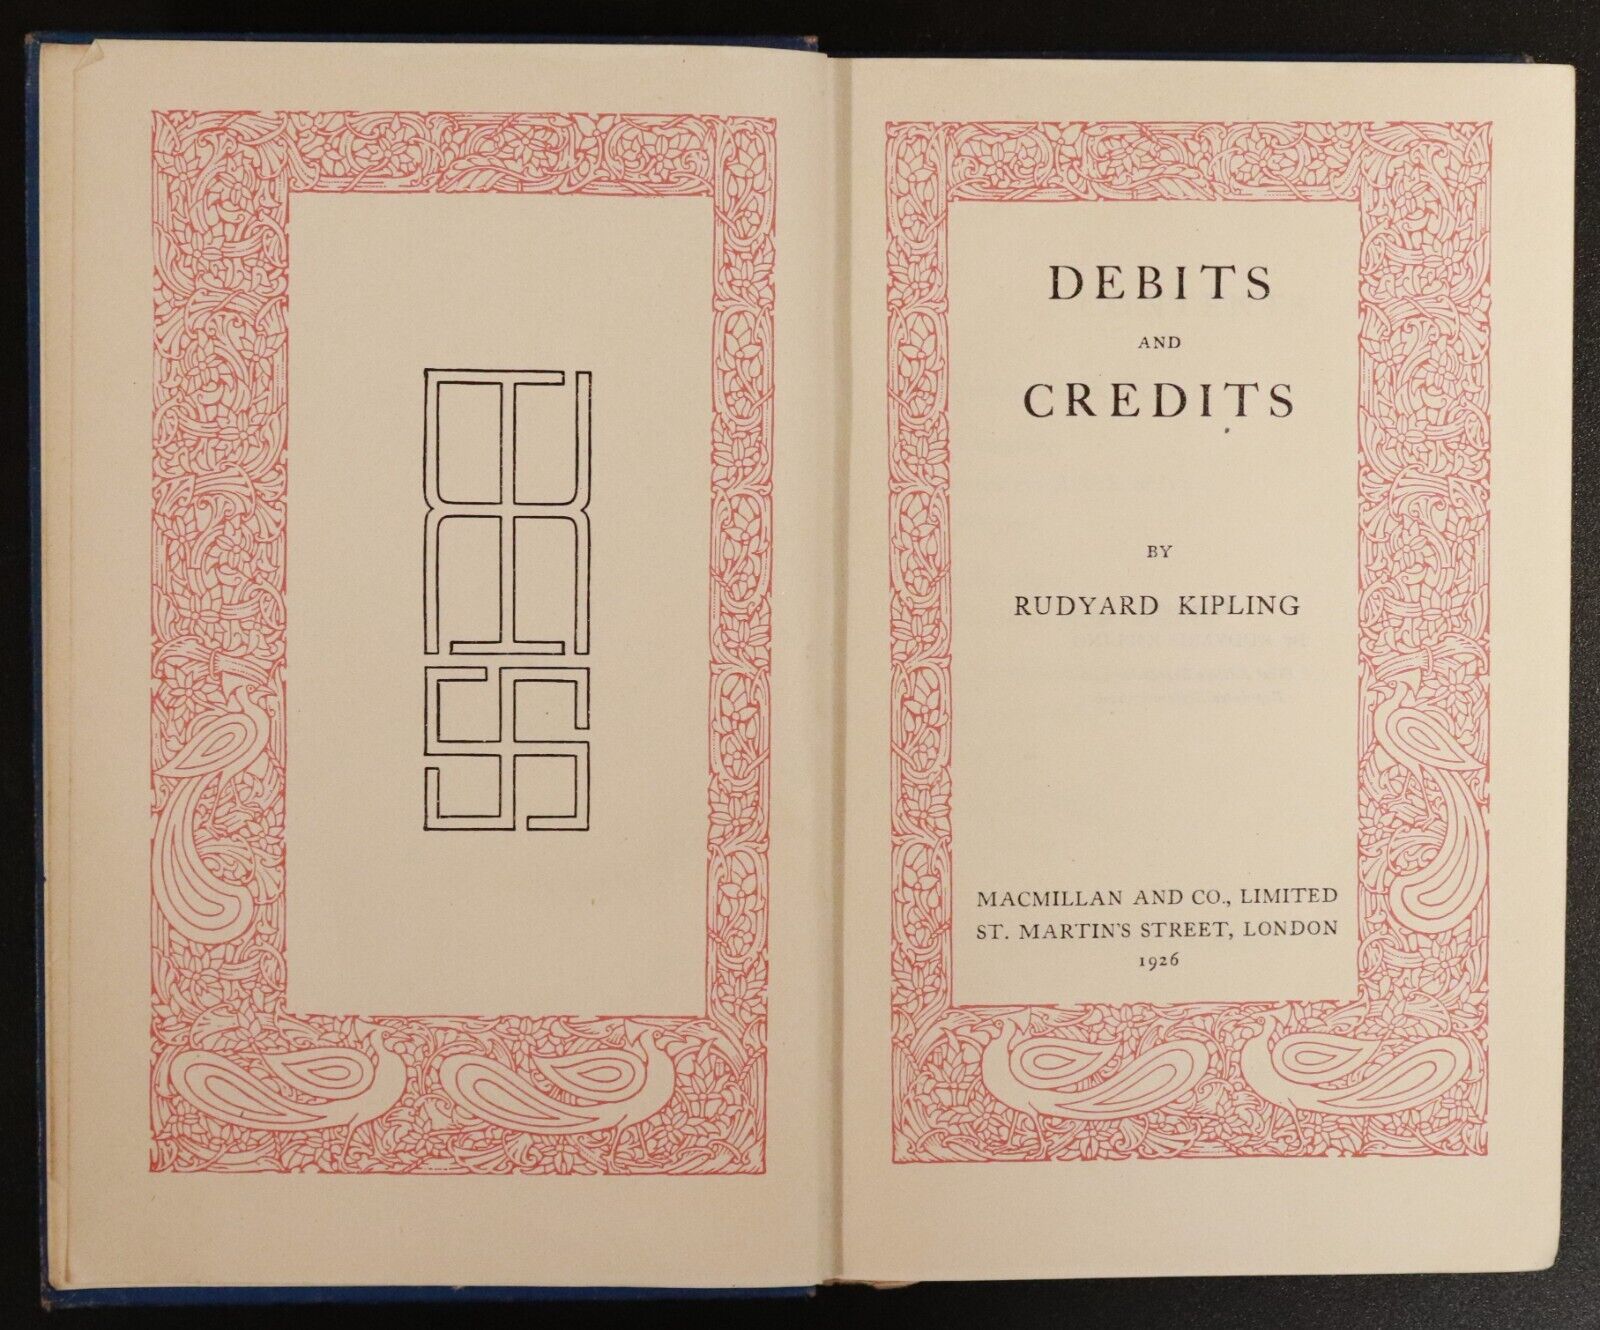 1925 Works Of Rudyard Kipling 3 Book Bundle Antique Books Debits & Credits - 0